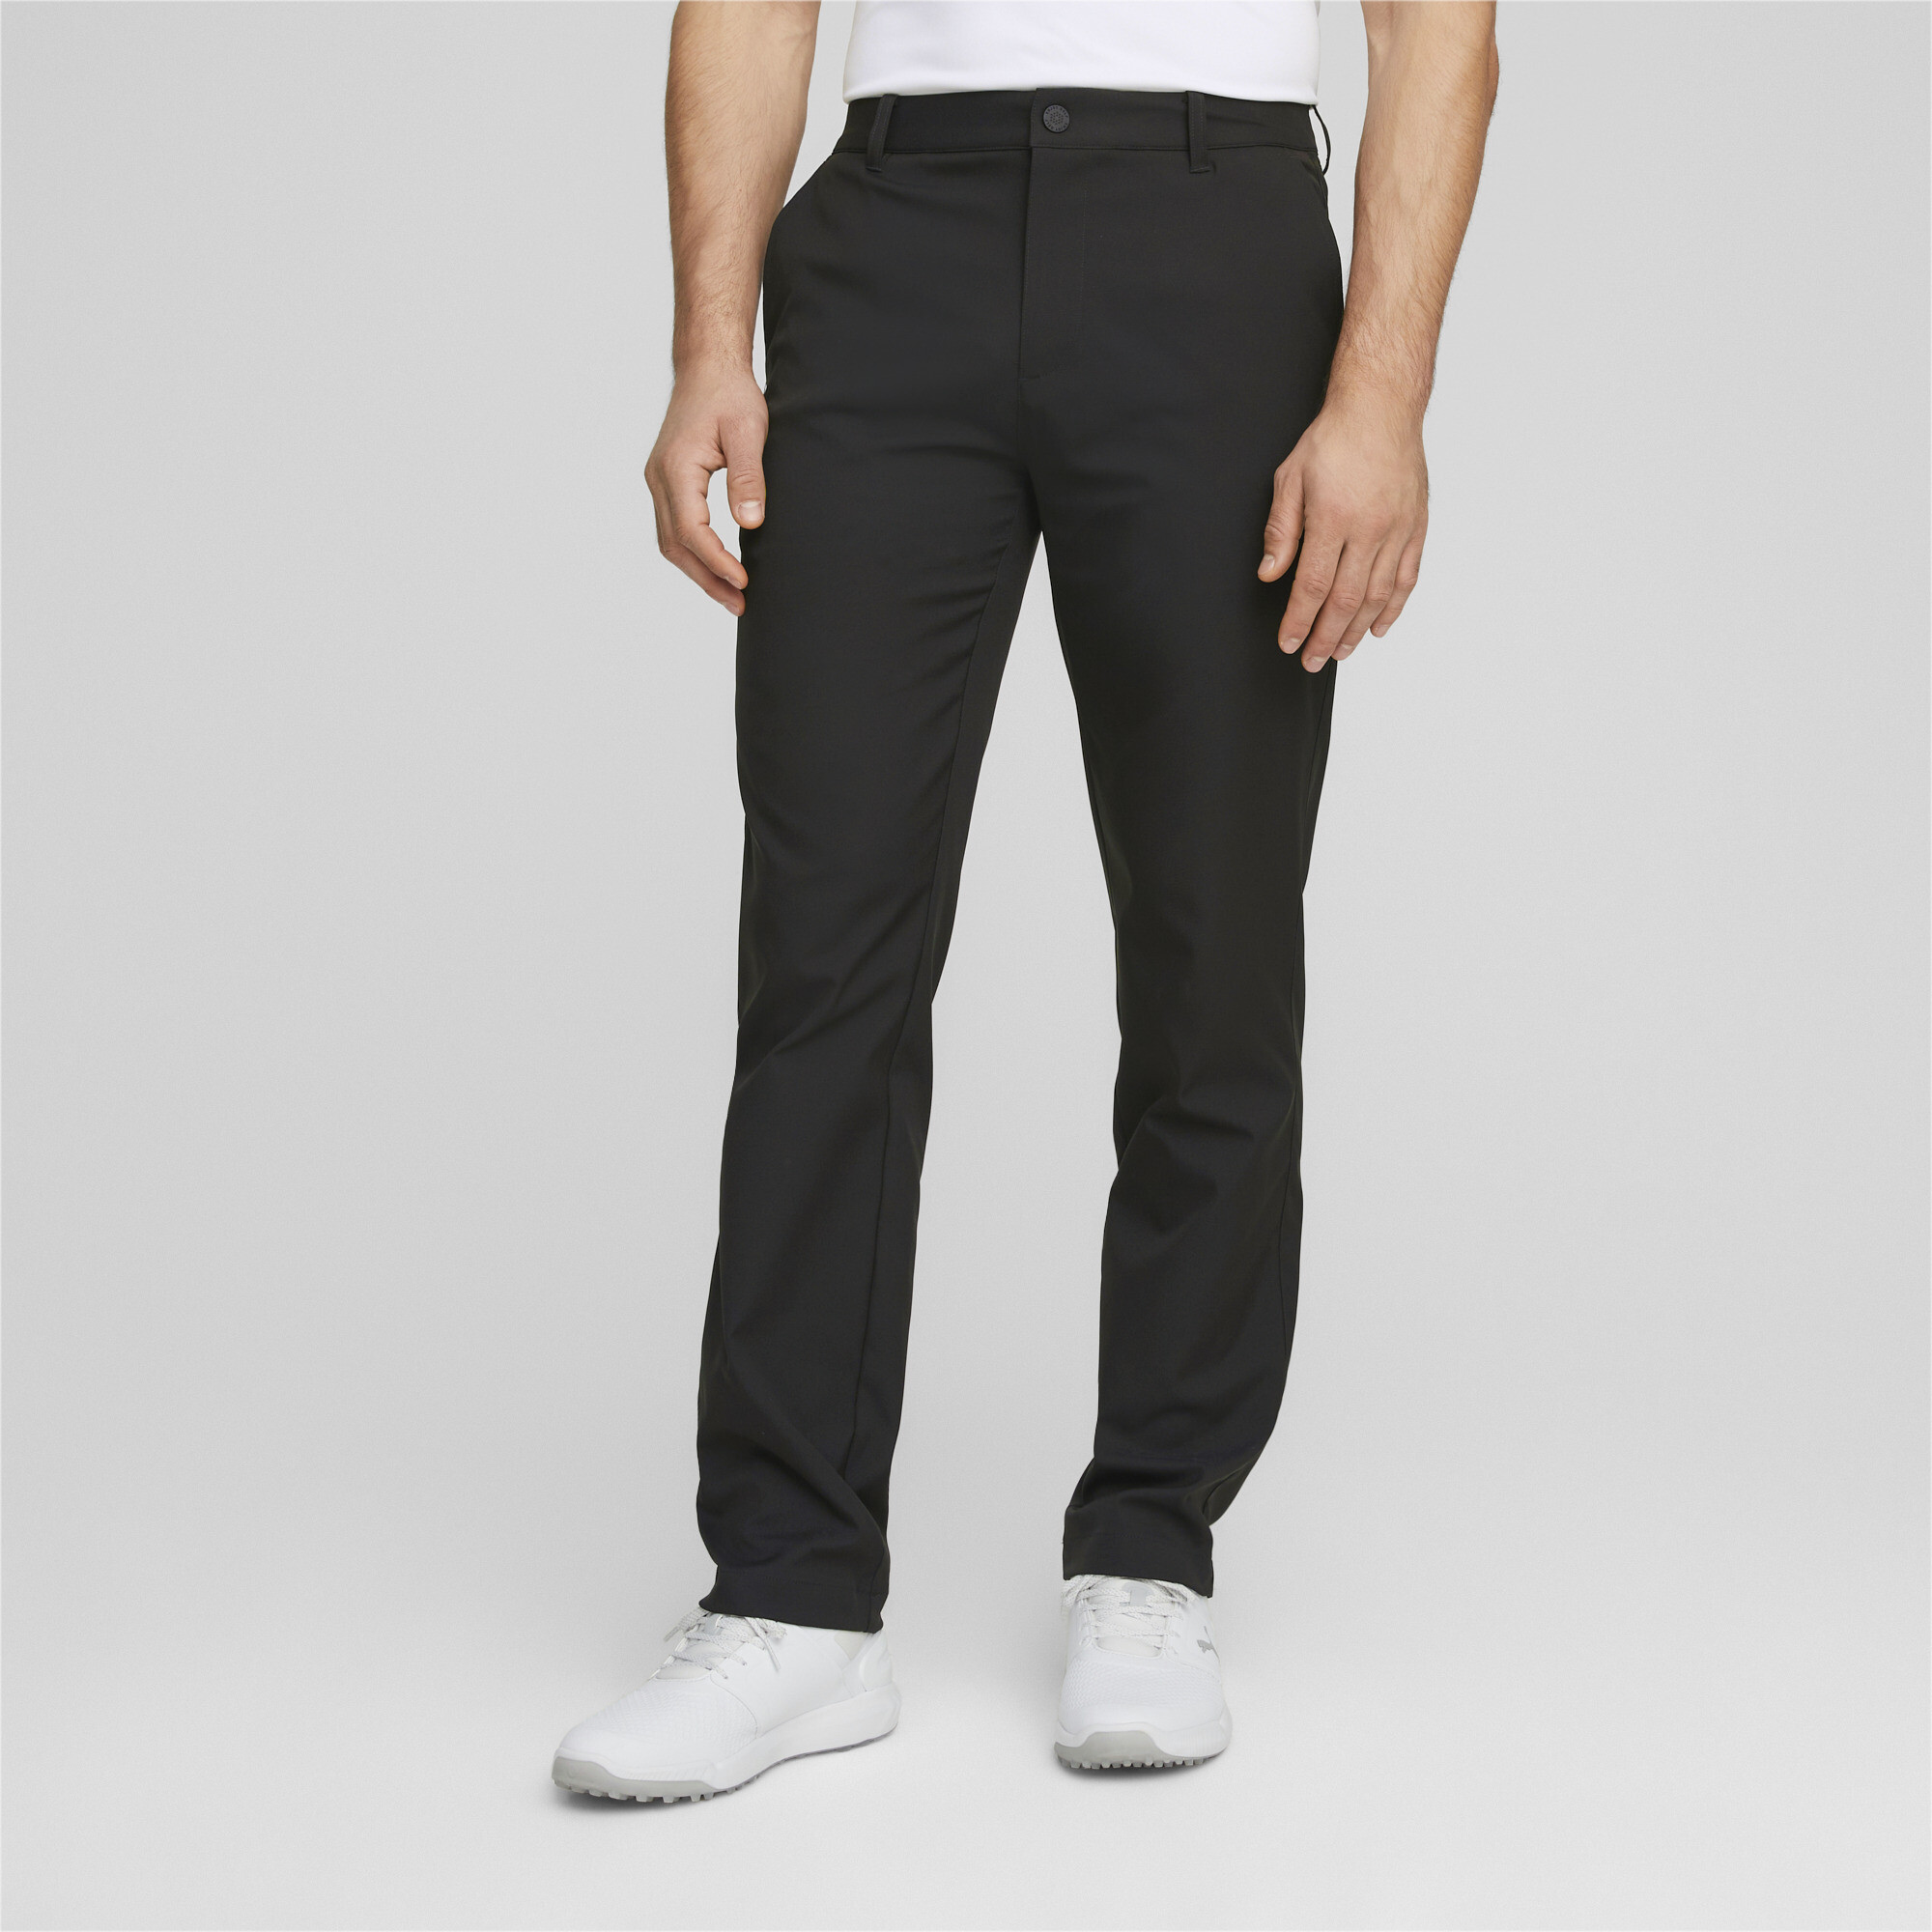 Men's Puma Dealer Golf Pants, Black, Size 36/36, Clothing